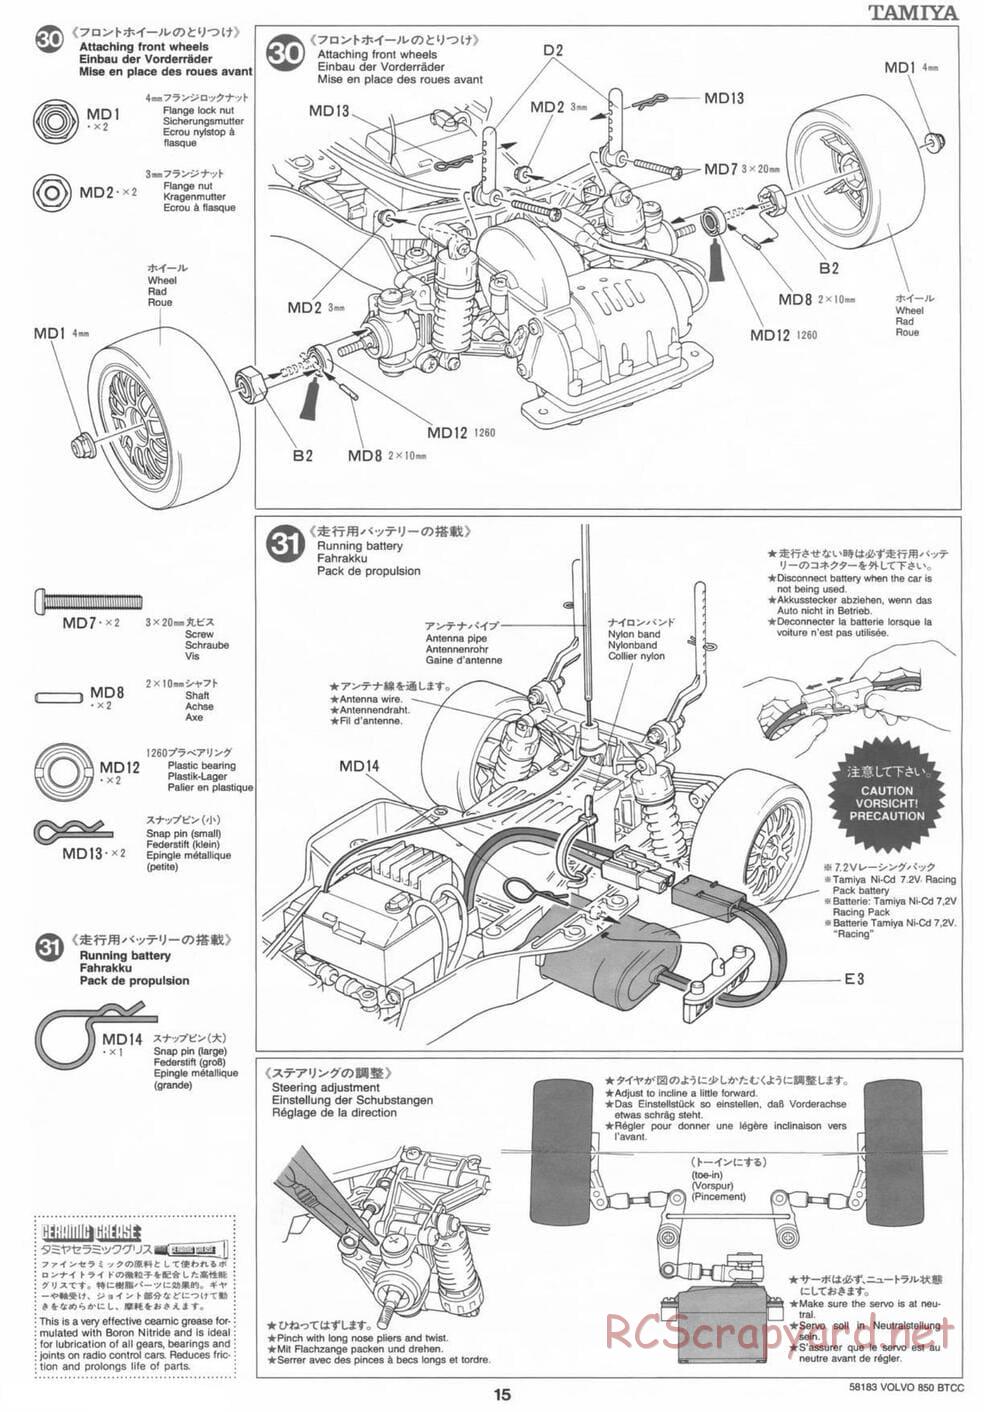 Tamiya - Volvo 850 BTCC - FF-01 Chassis - Manual - Page 15